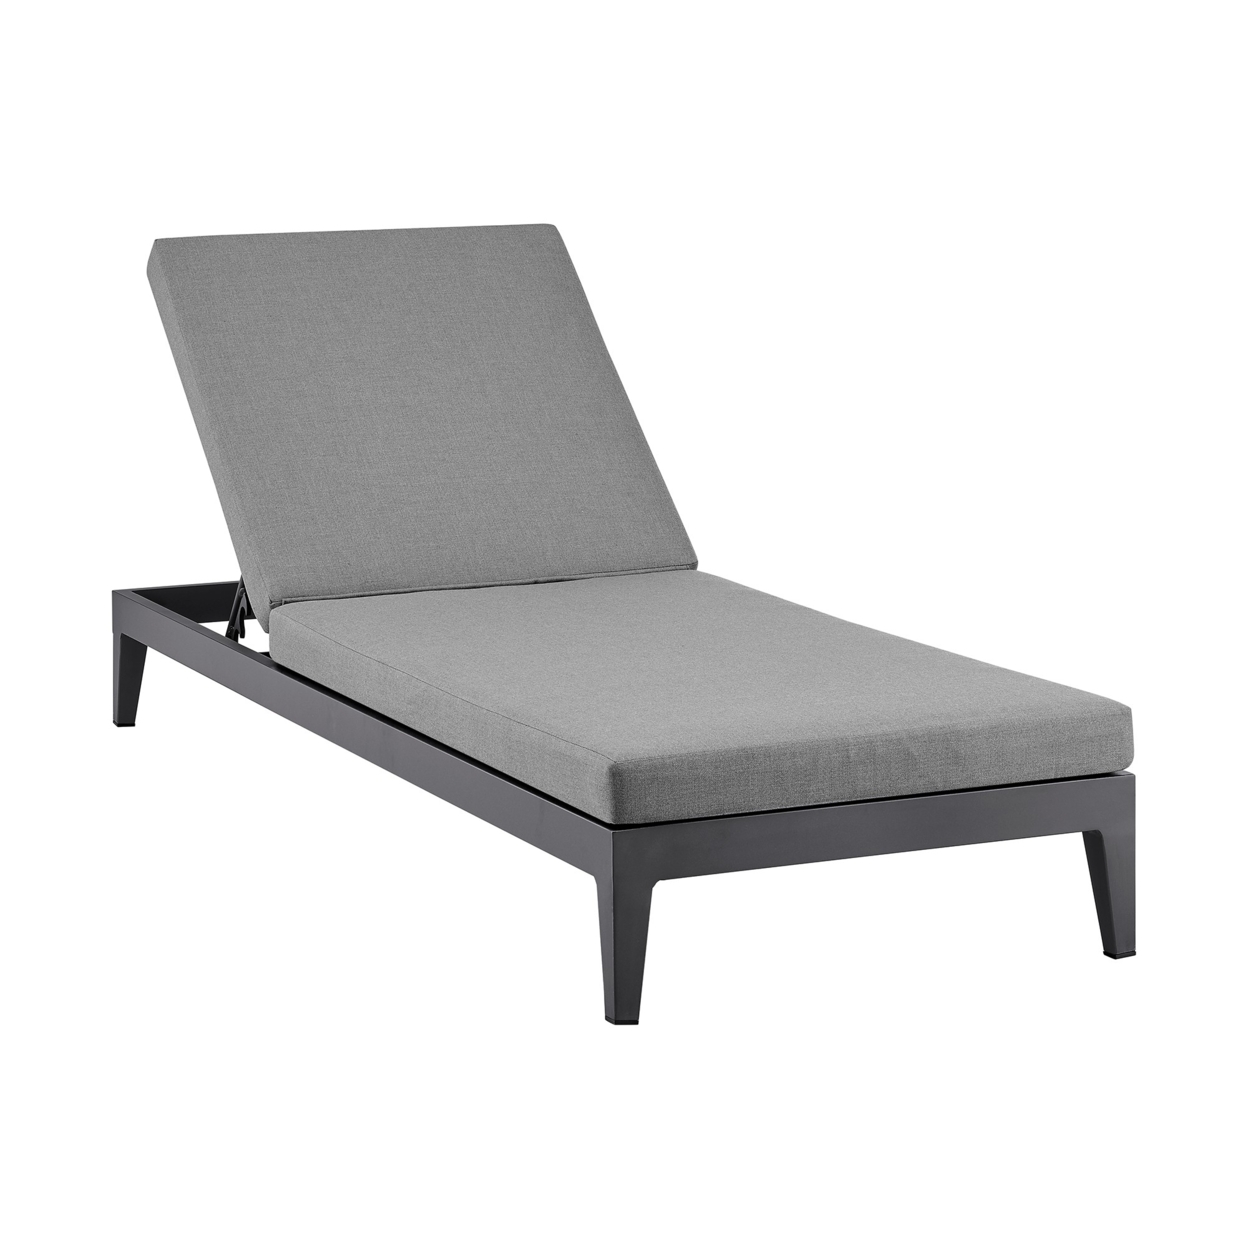 Jax 80 Inch Patio Adjustable Chaise Lounge Chair, Aluminum Frame, Dark Gray- Saltoro Sherpi